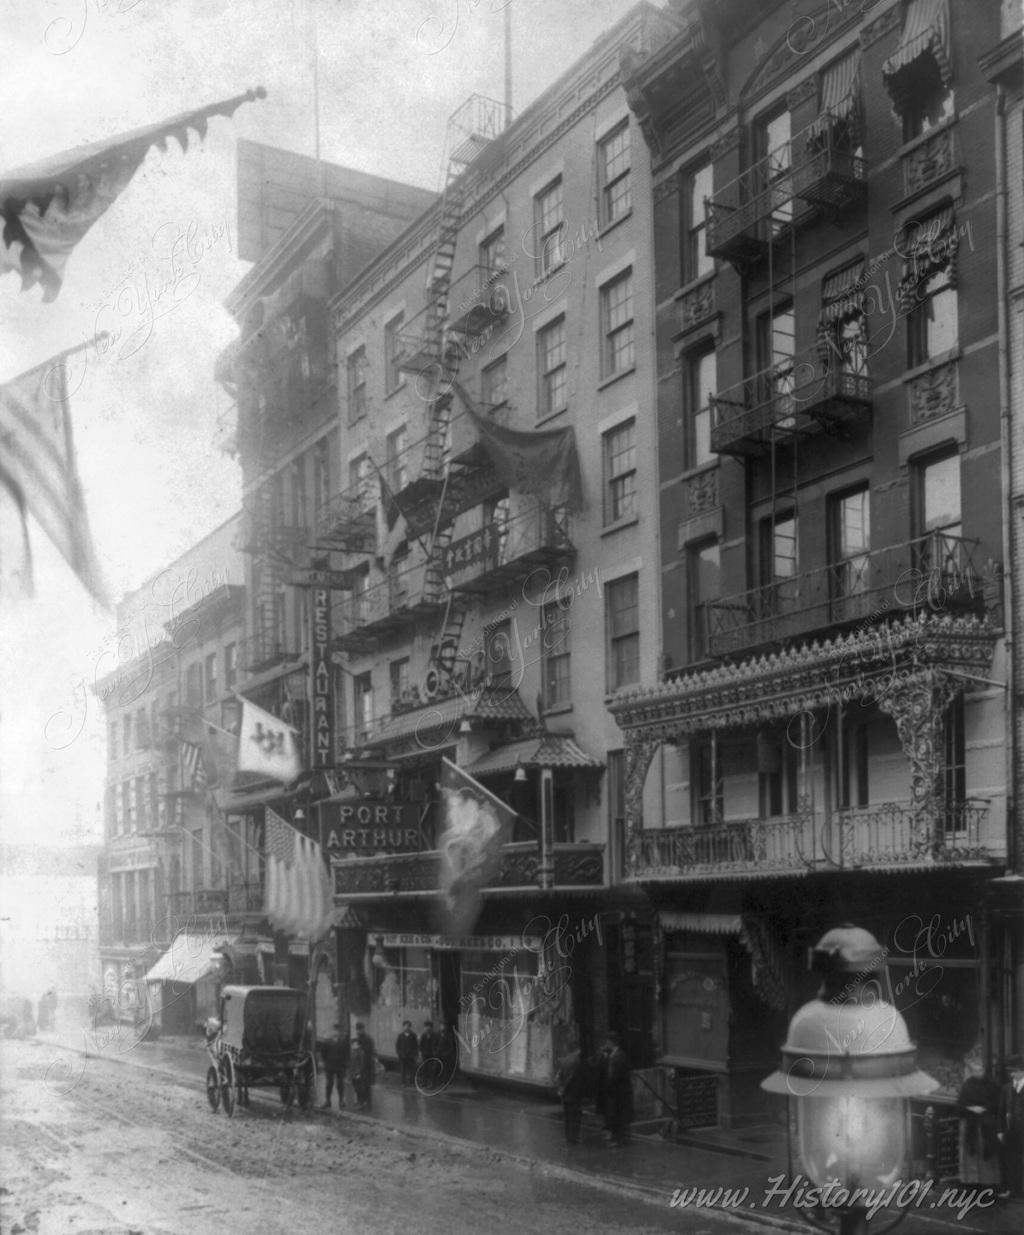 Photograph of Mott Street decorated for New Year, Jan. 21, 1909 - looking toward Port Arthur restaurant.